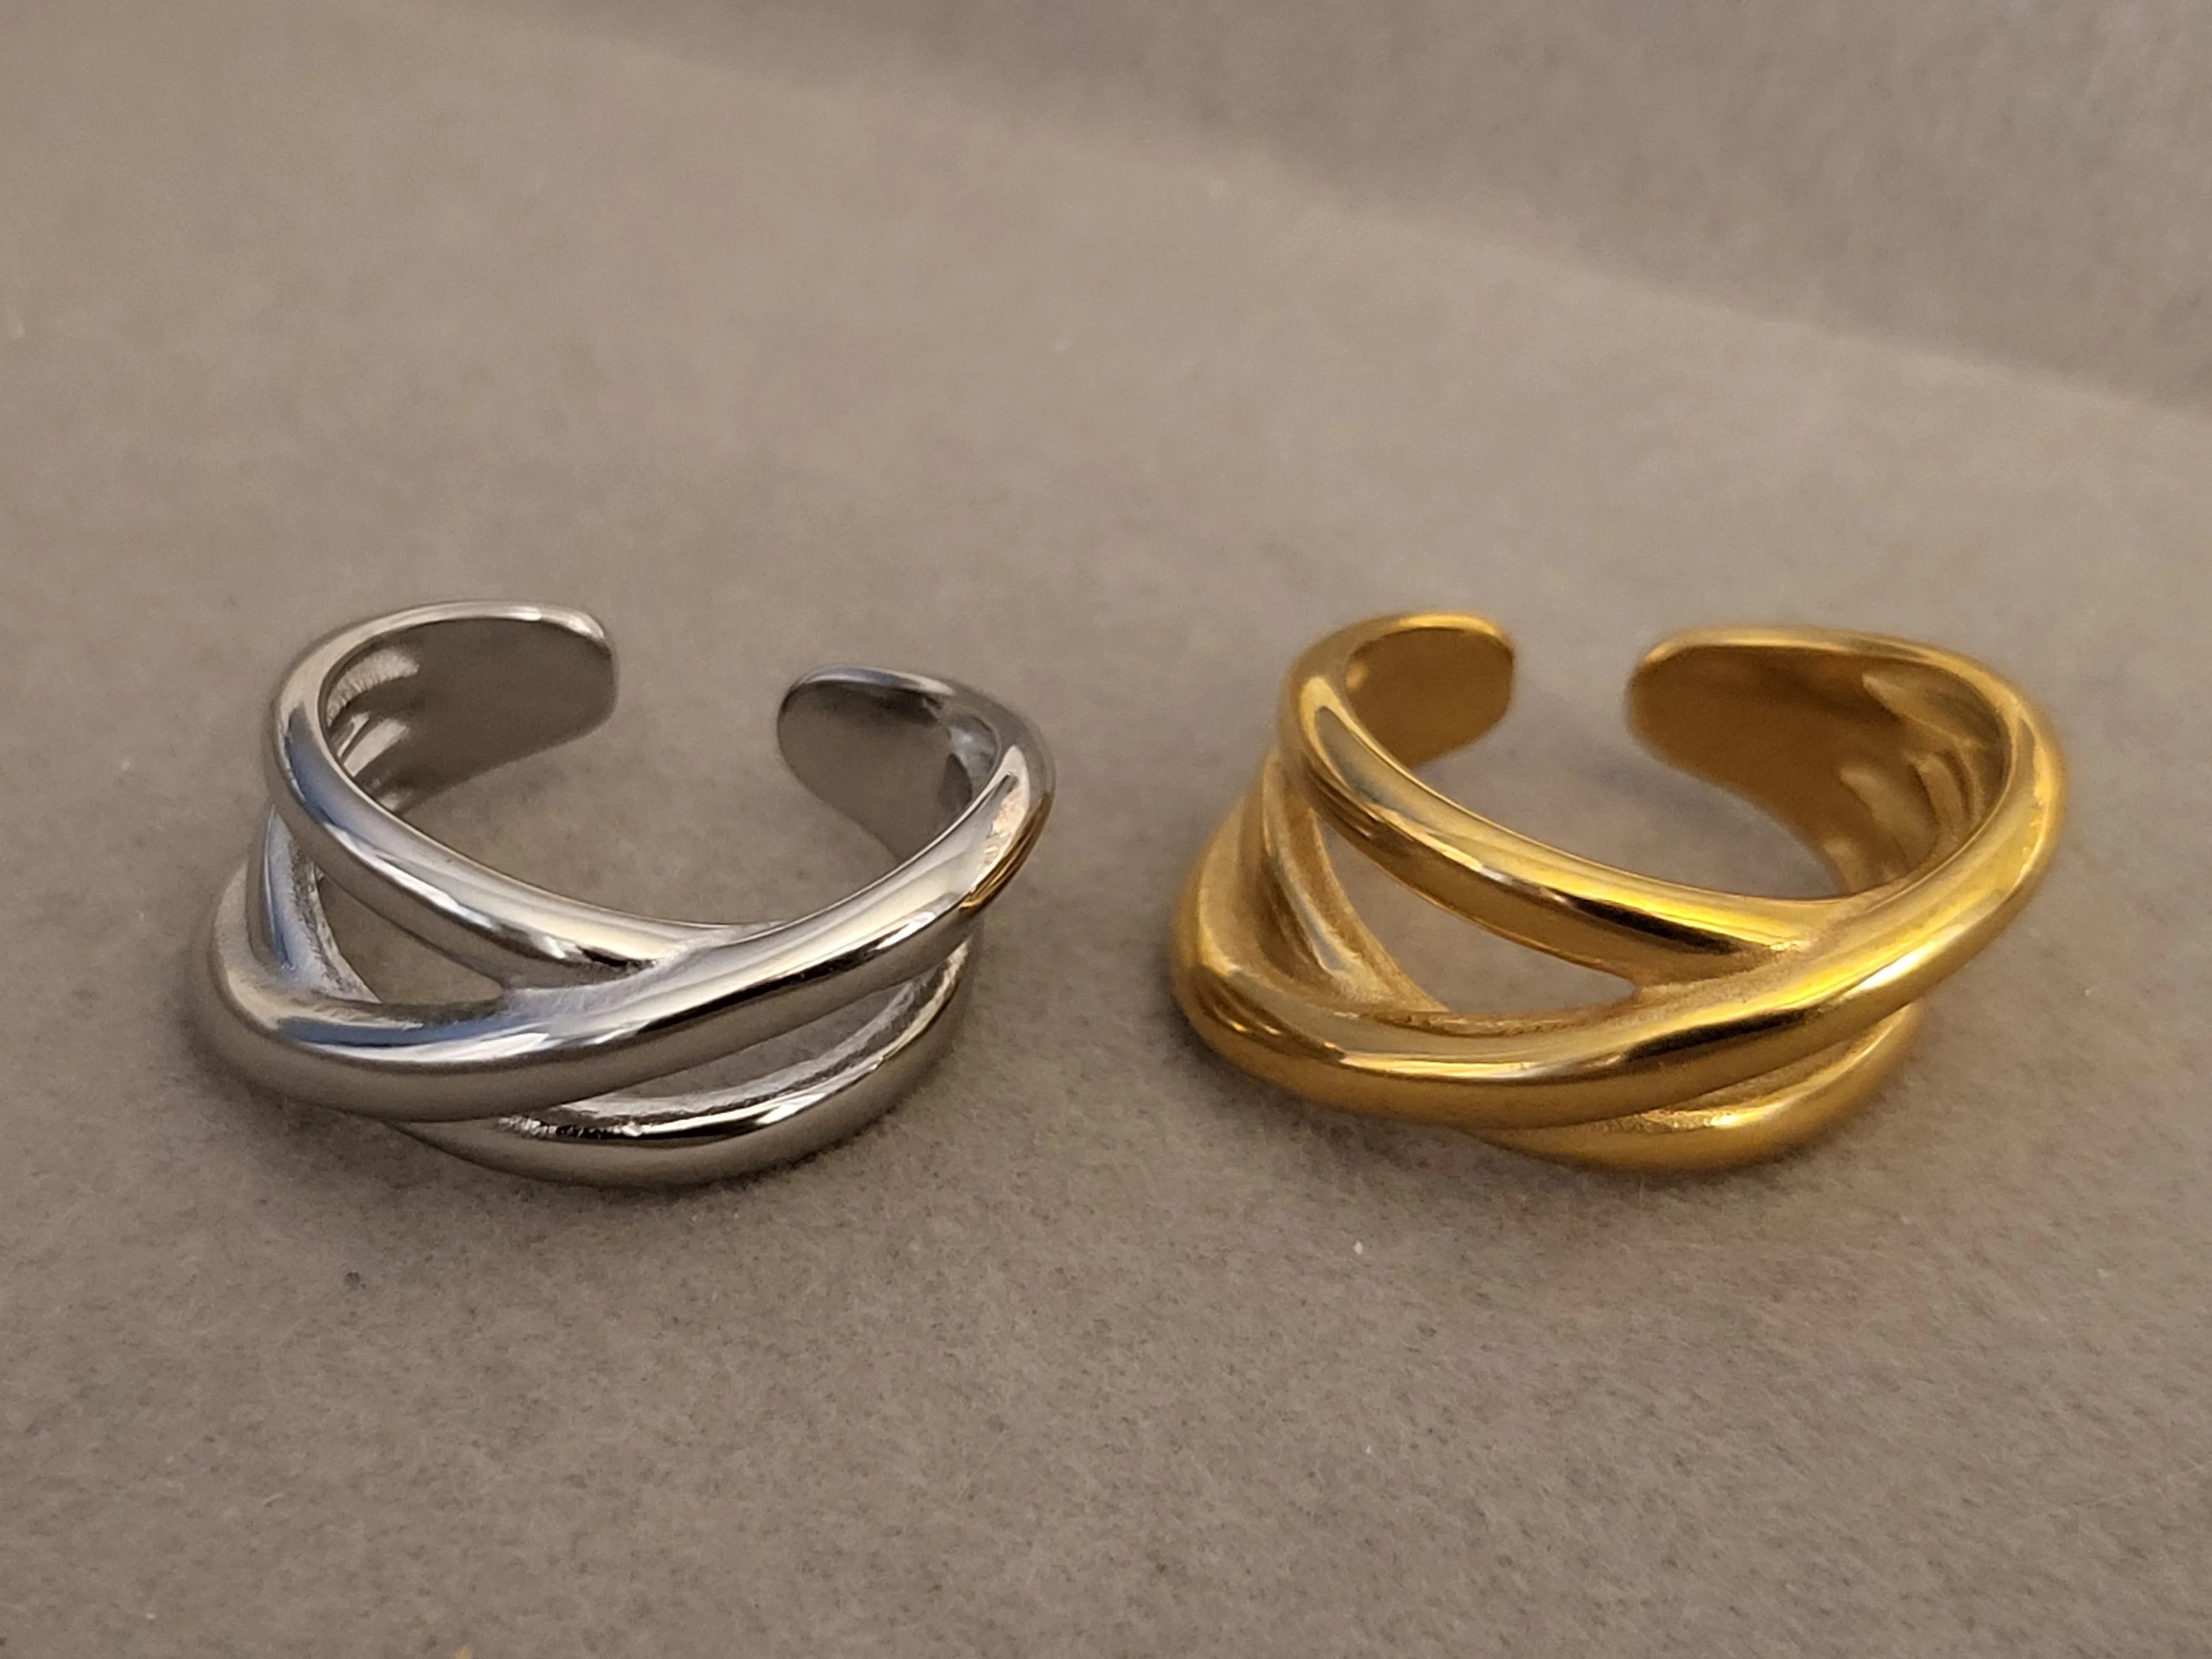 Stainless Steel Adjustable Geometric Crossed Line Rings product images.